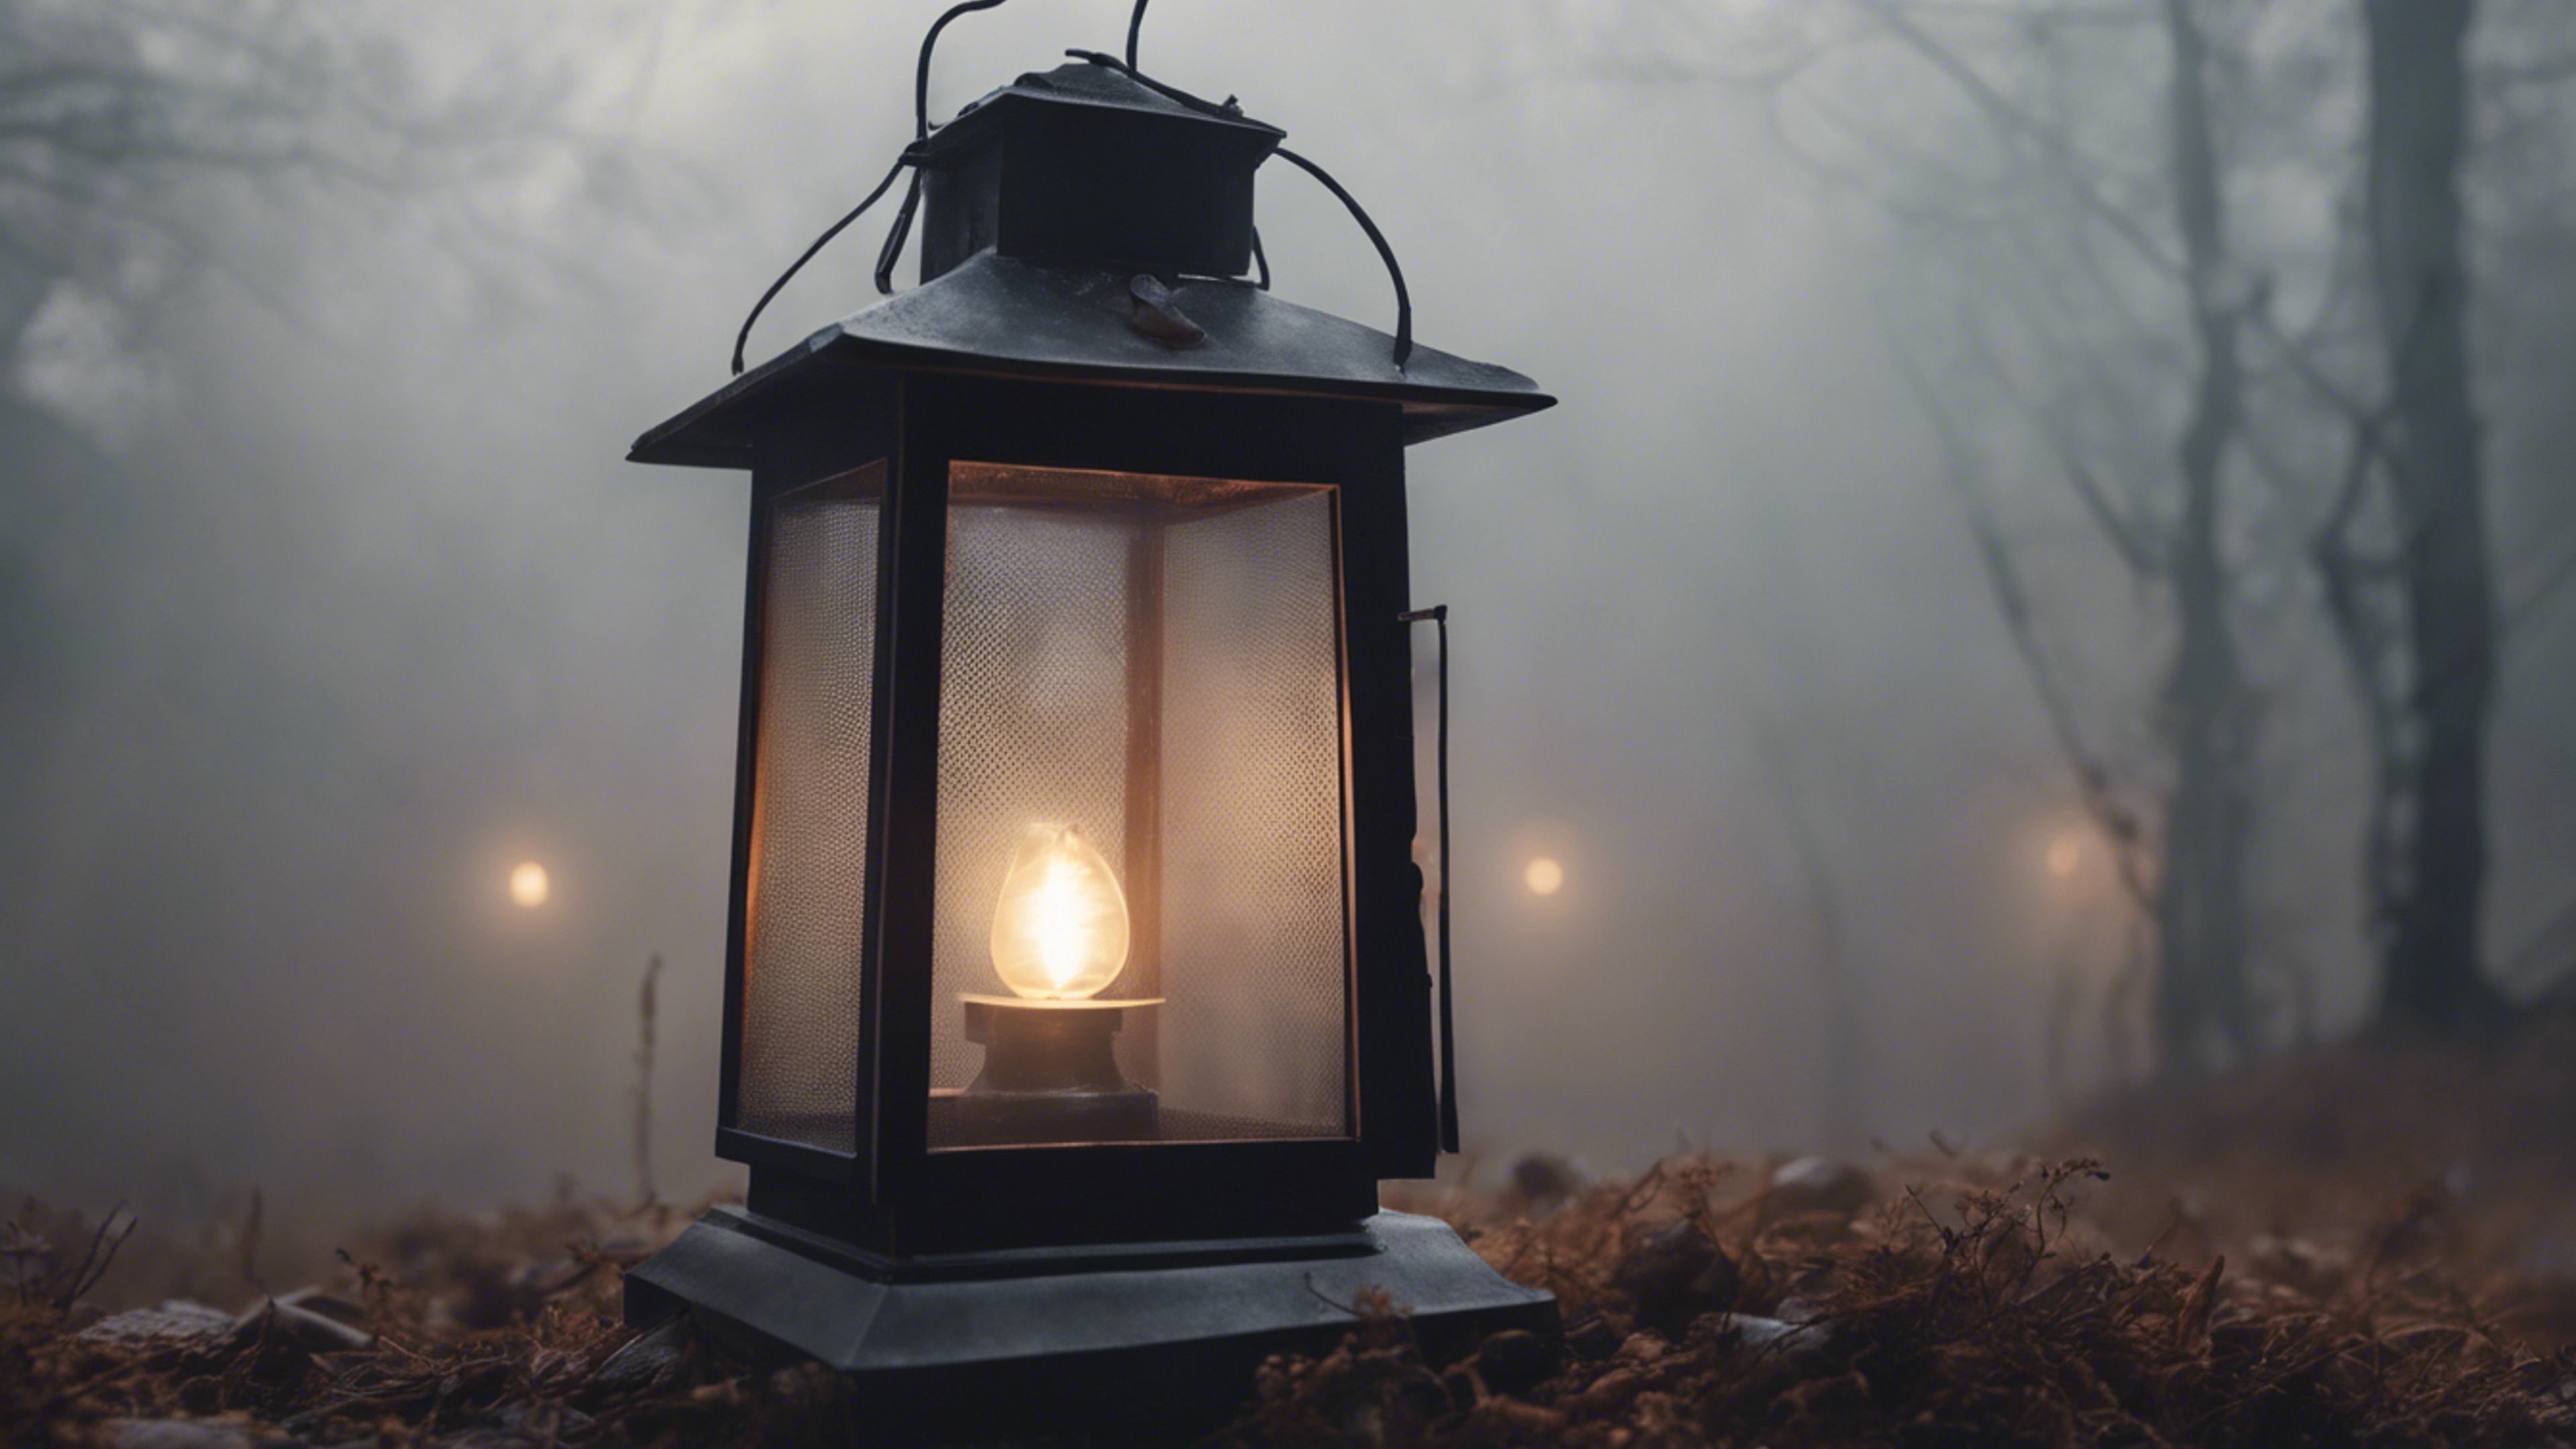 A lone lantern flickering feebly from the midst of a dense fog. Wallpaper[fd0feeeb6e864d4282e6]